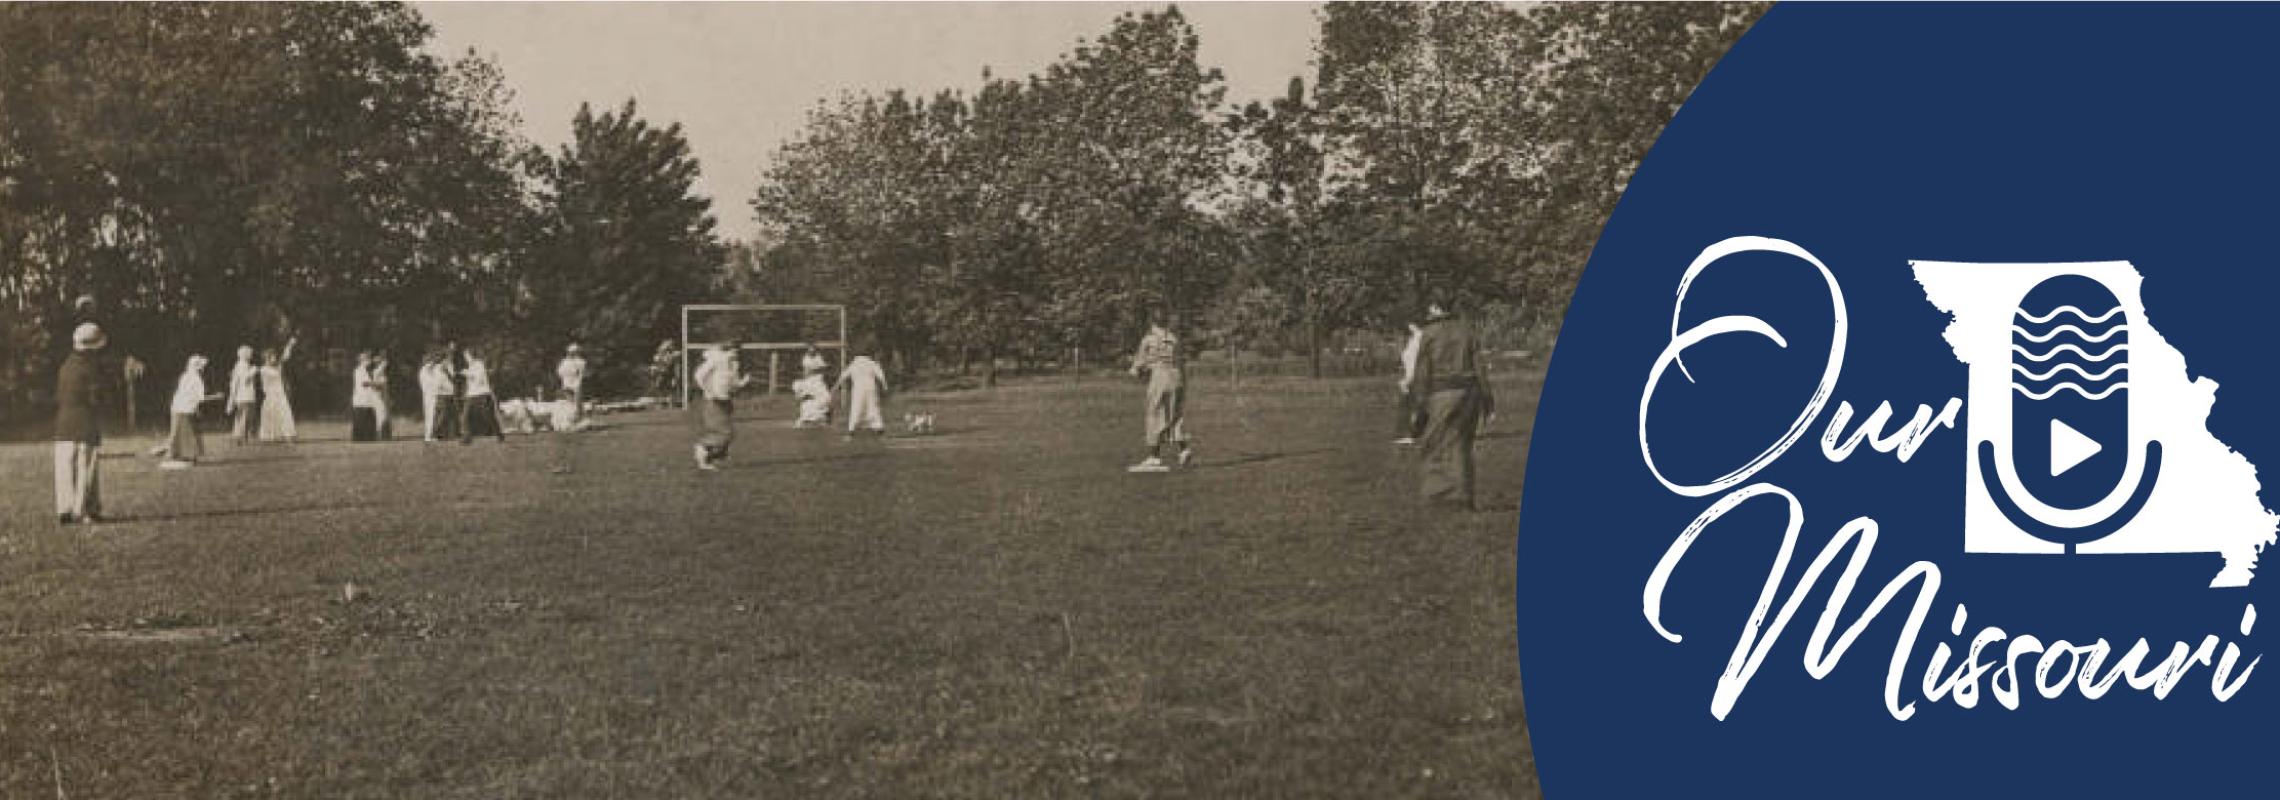 Girls Playing Soccer at North Junior High School in Kirkwood, Missouri